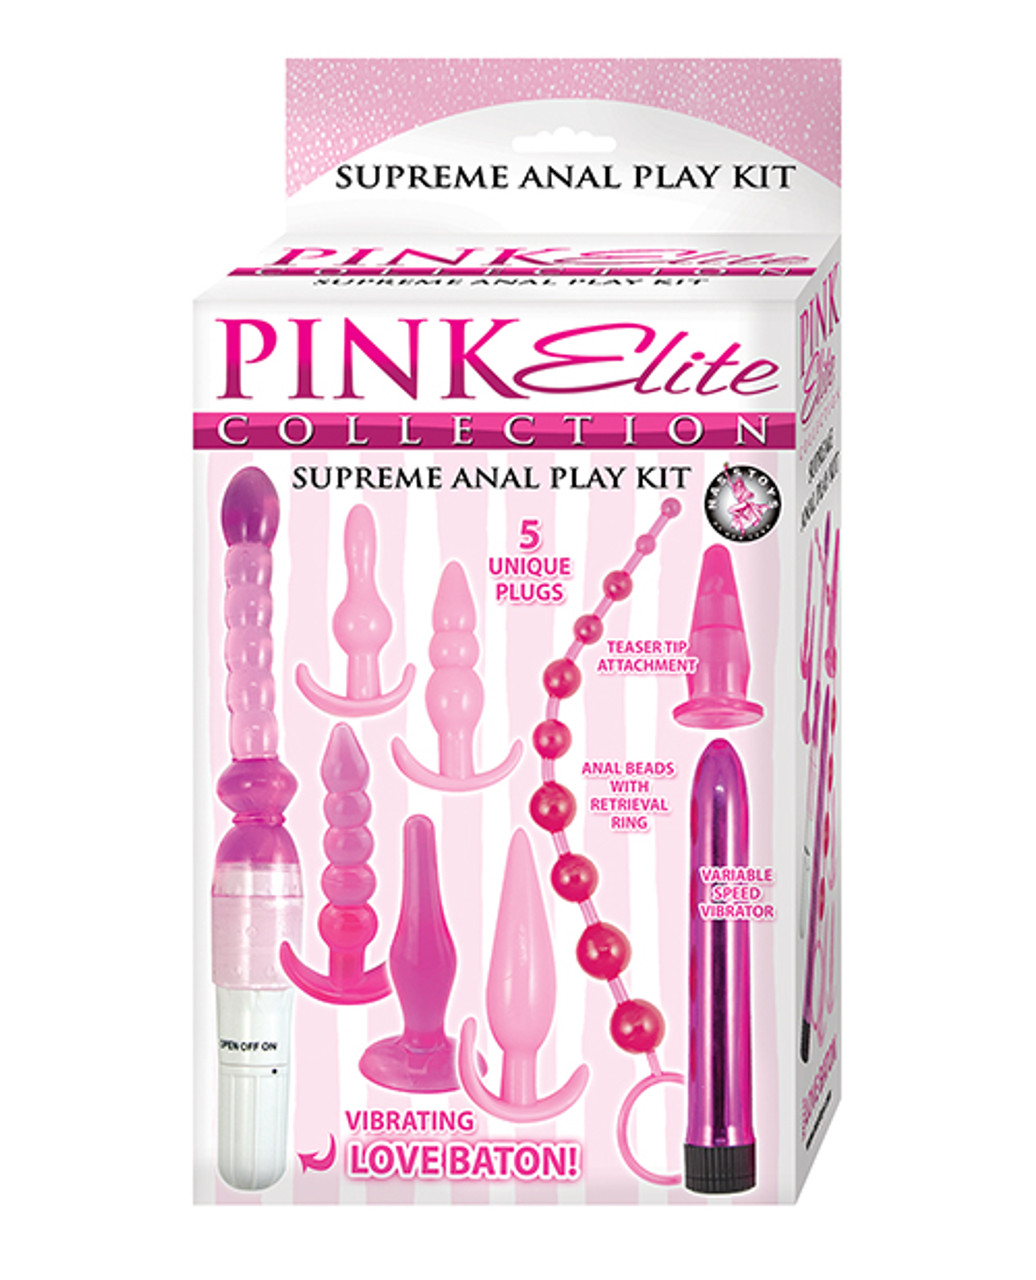 Pink Elite Collection Supreme Anal Play Kit